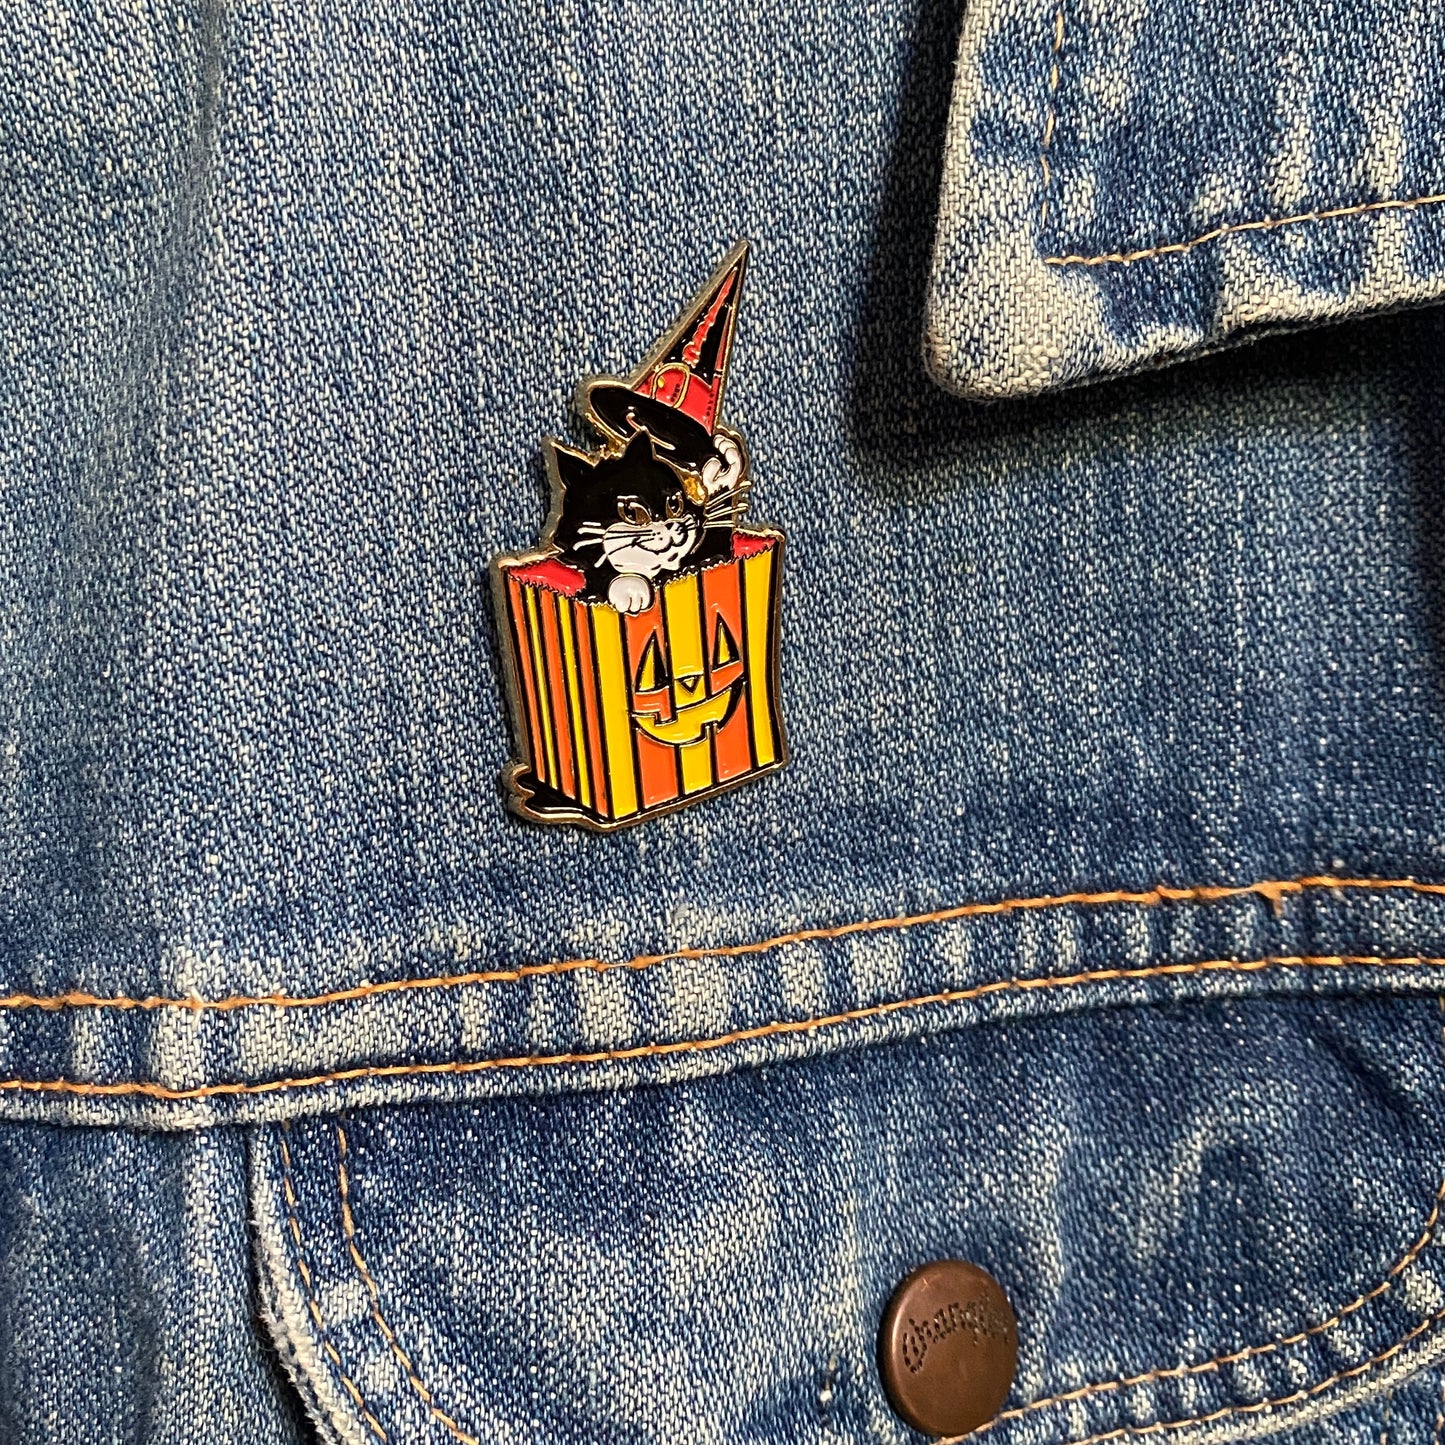 Halloween Cat Enamel Pin